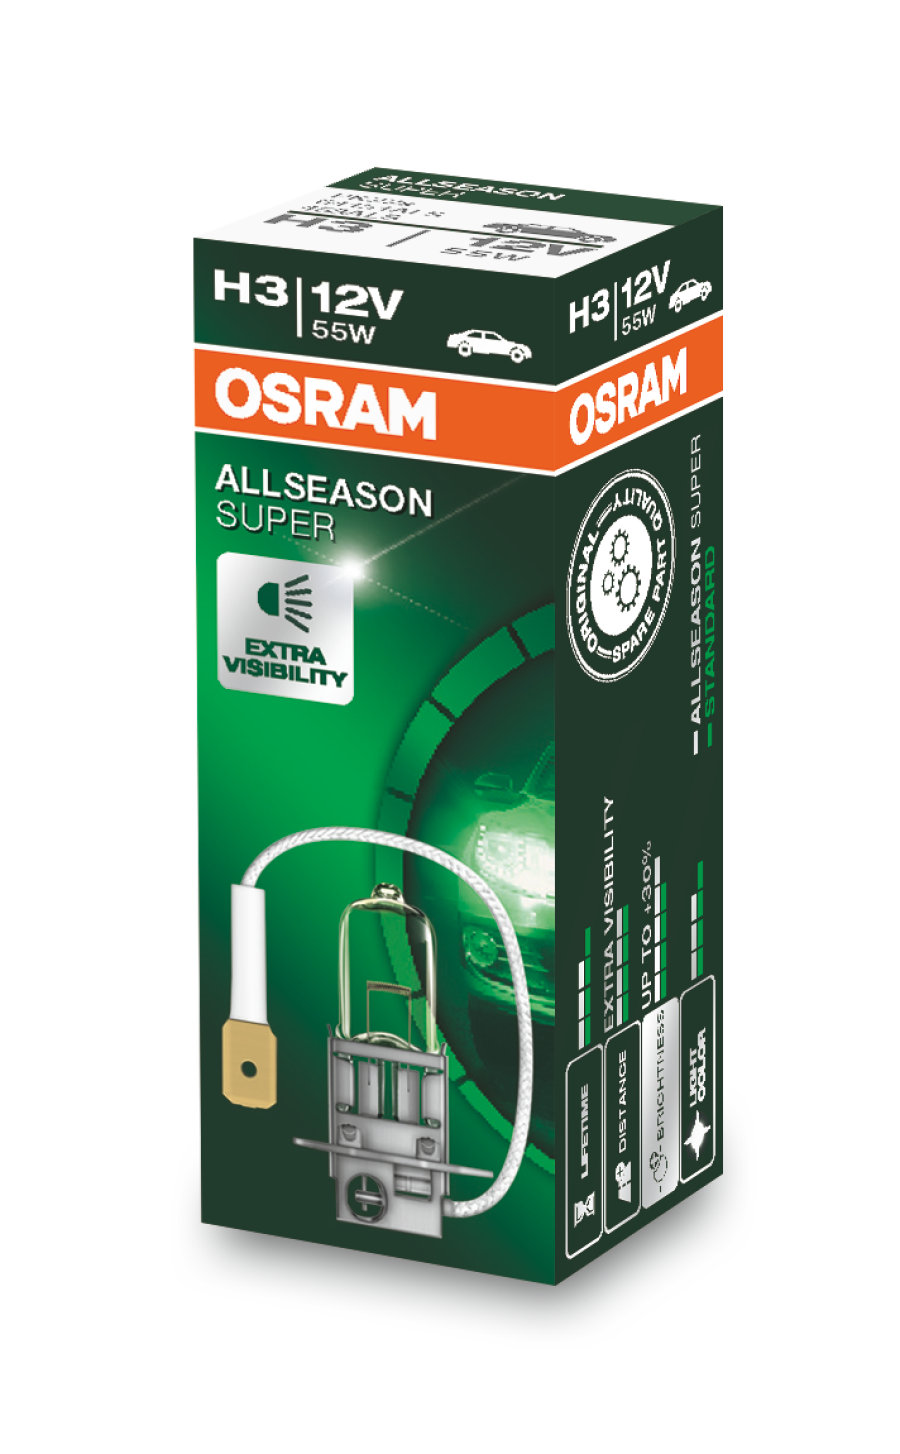 Halogeeni poltin OSRAM ALLSEASON SUPER 12V H3 55W